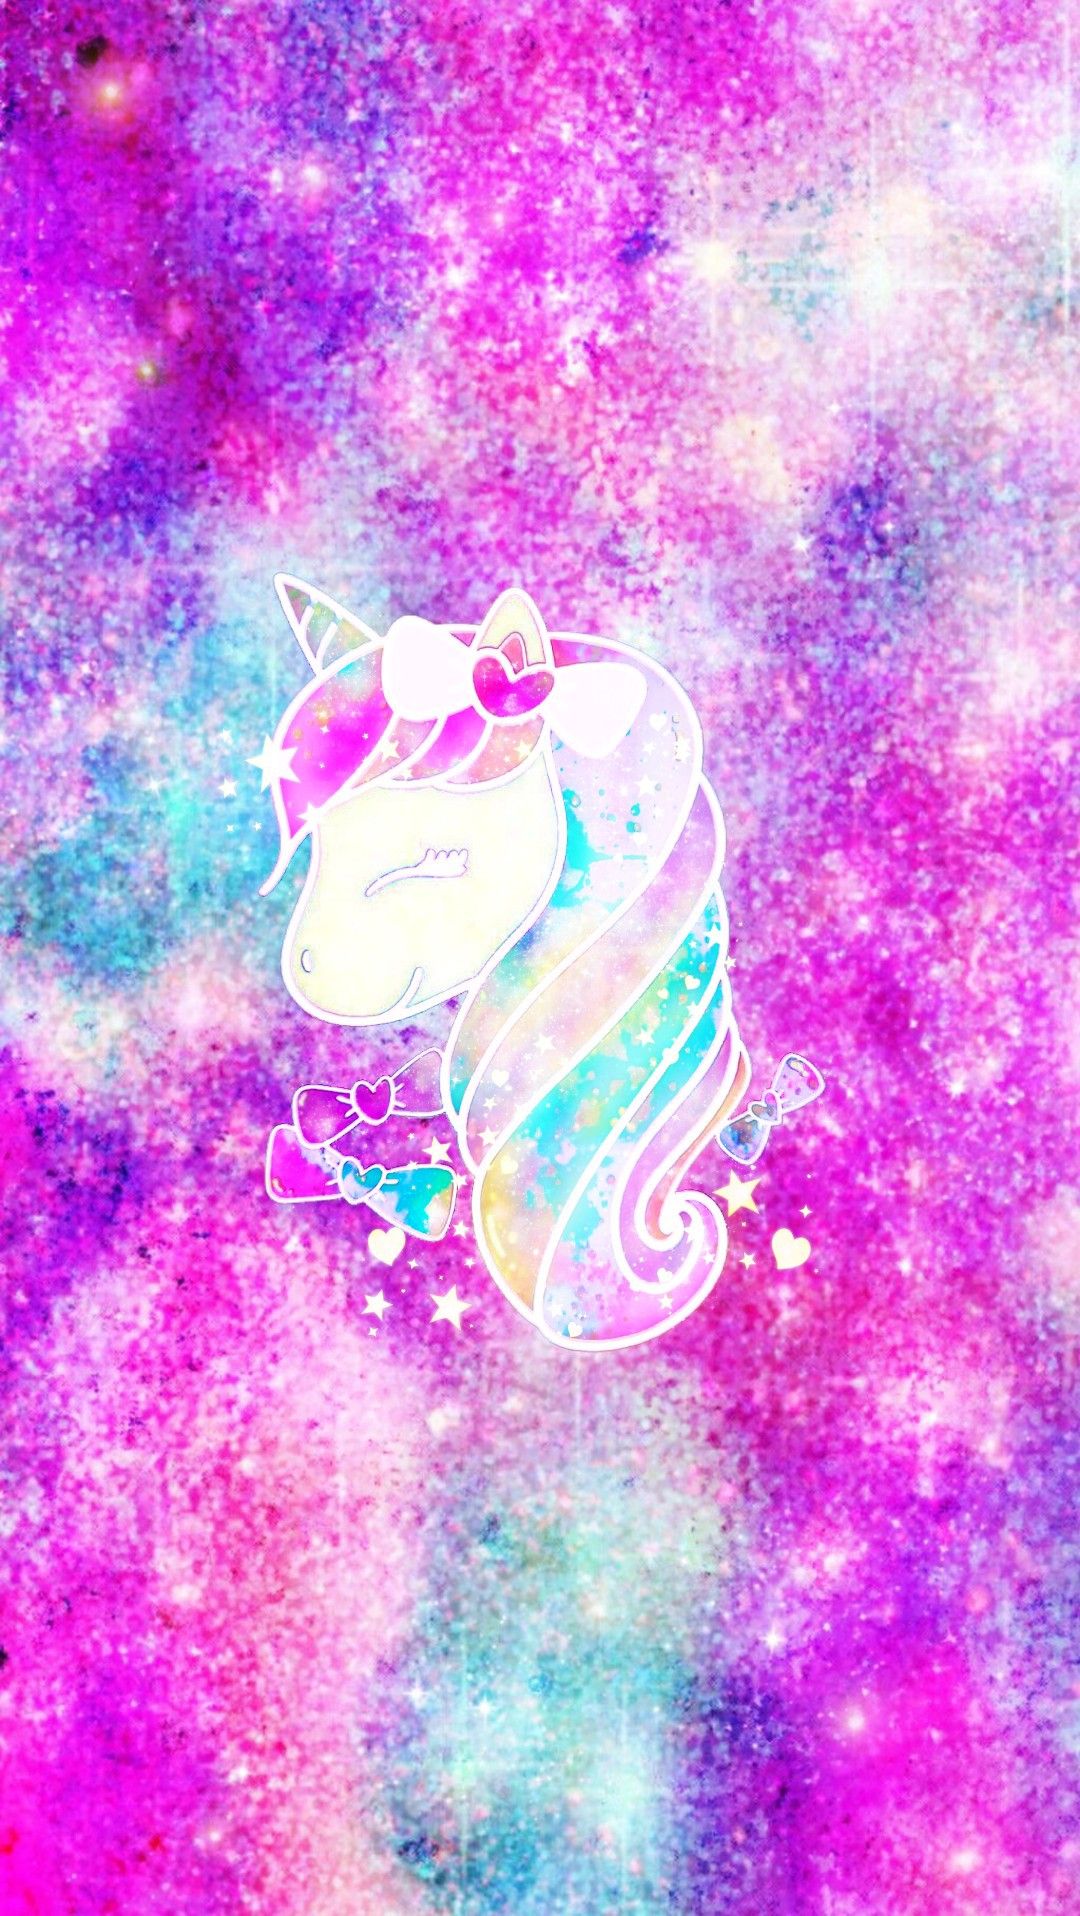 1080x1916 Наклейка Cute Unicorn Galaxy от @mpink background by me #wallpape...